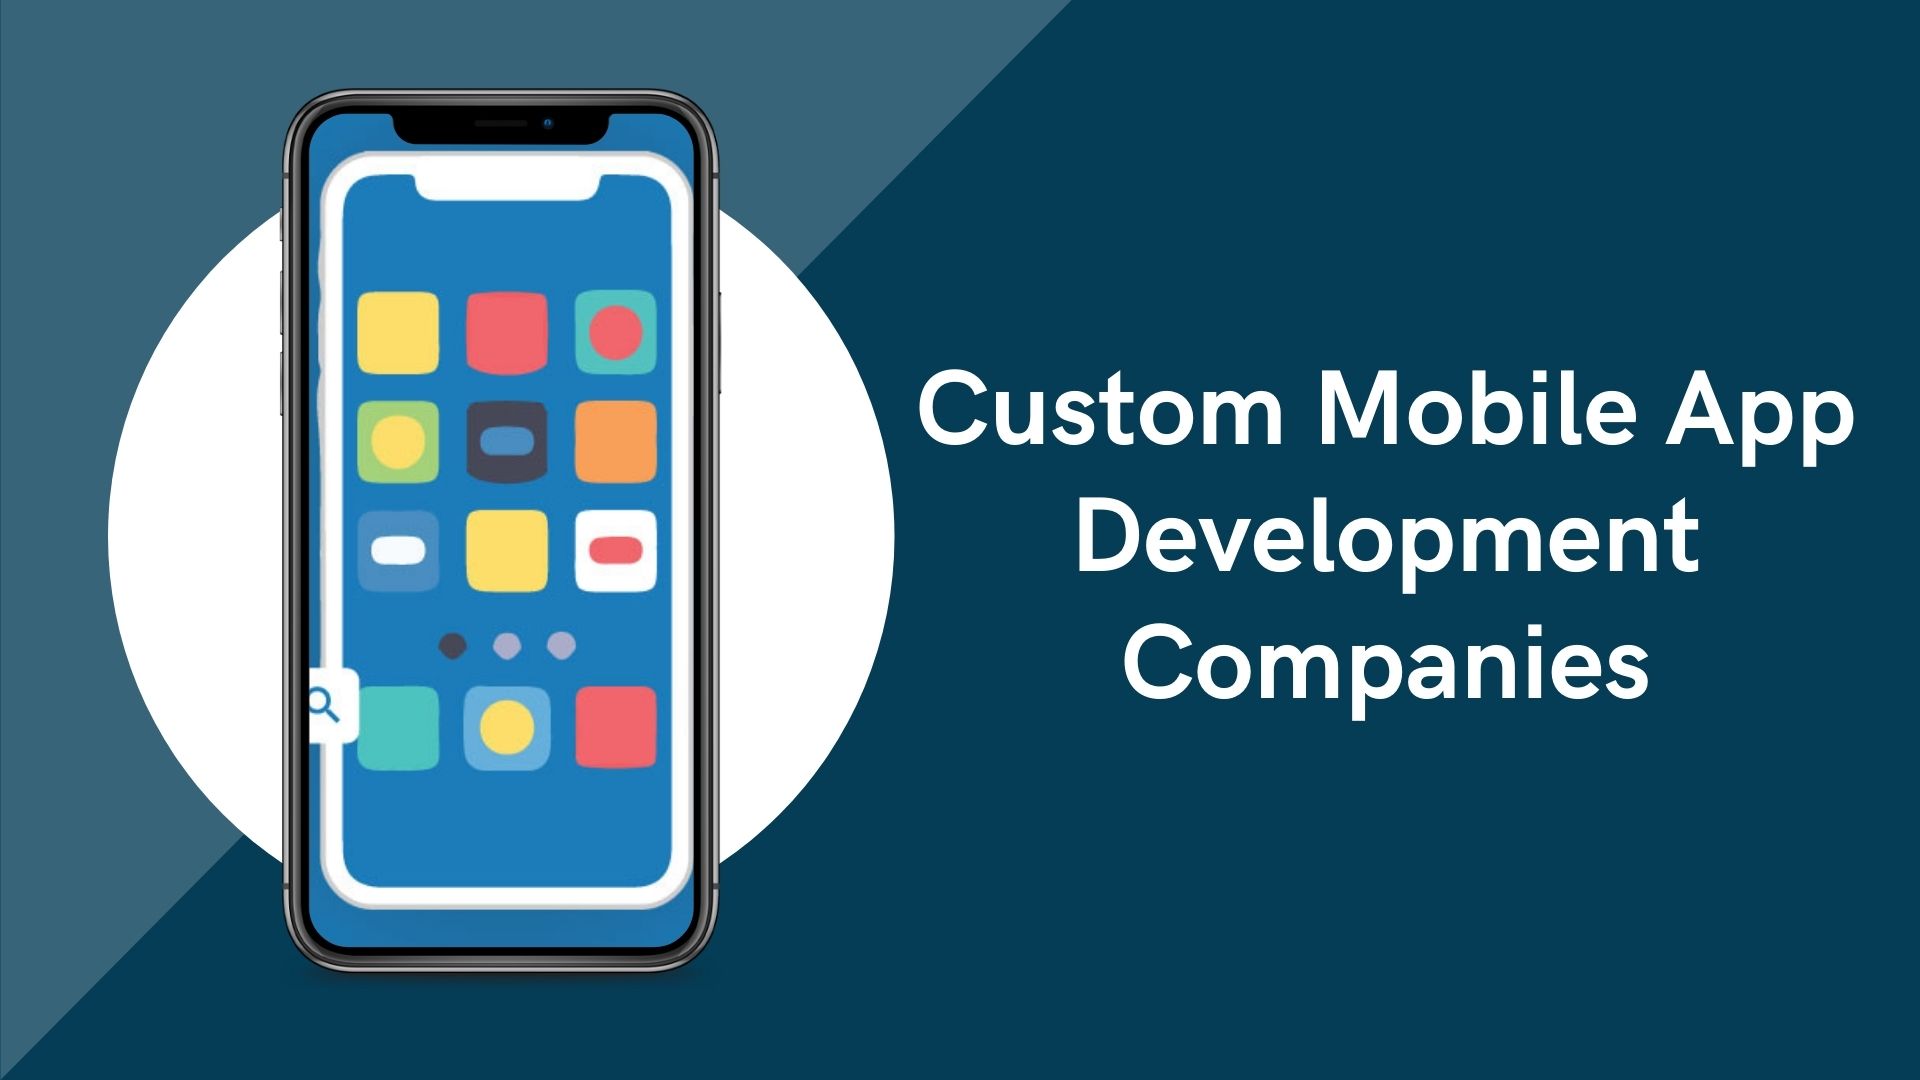 Custom Mobile App
Development
Companies